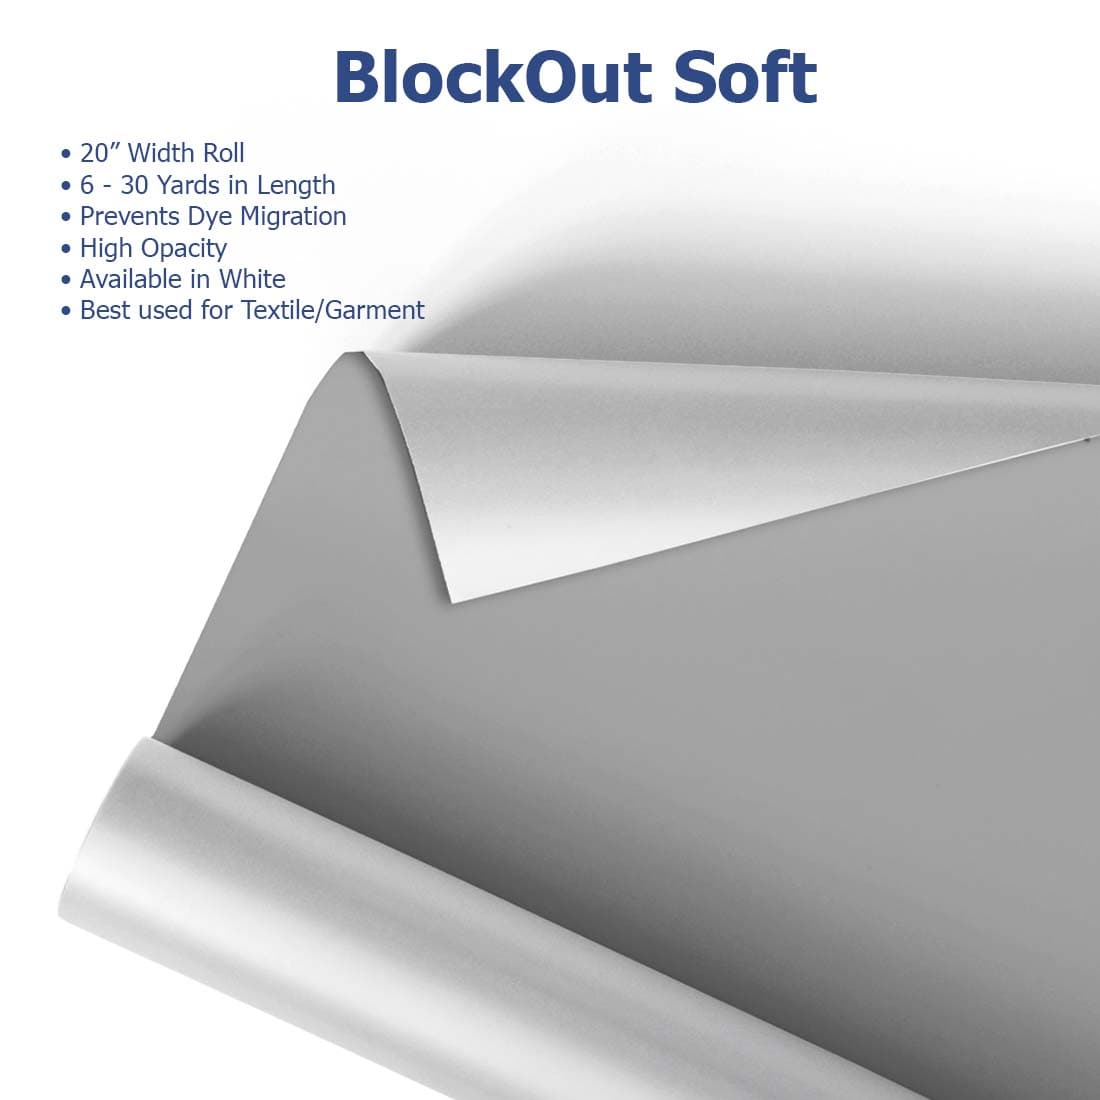 MultiCut™ BlockOut Soft Heat Transfer Vinyl 20